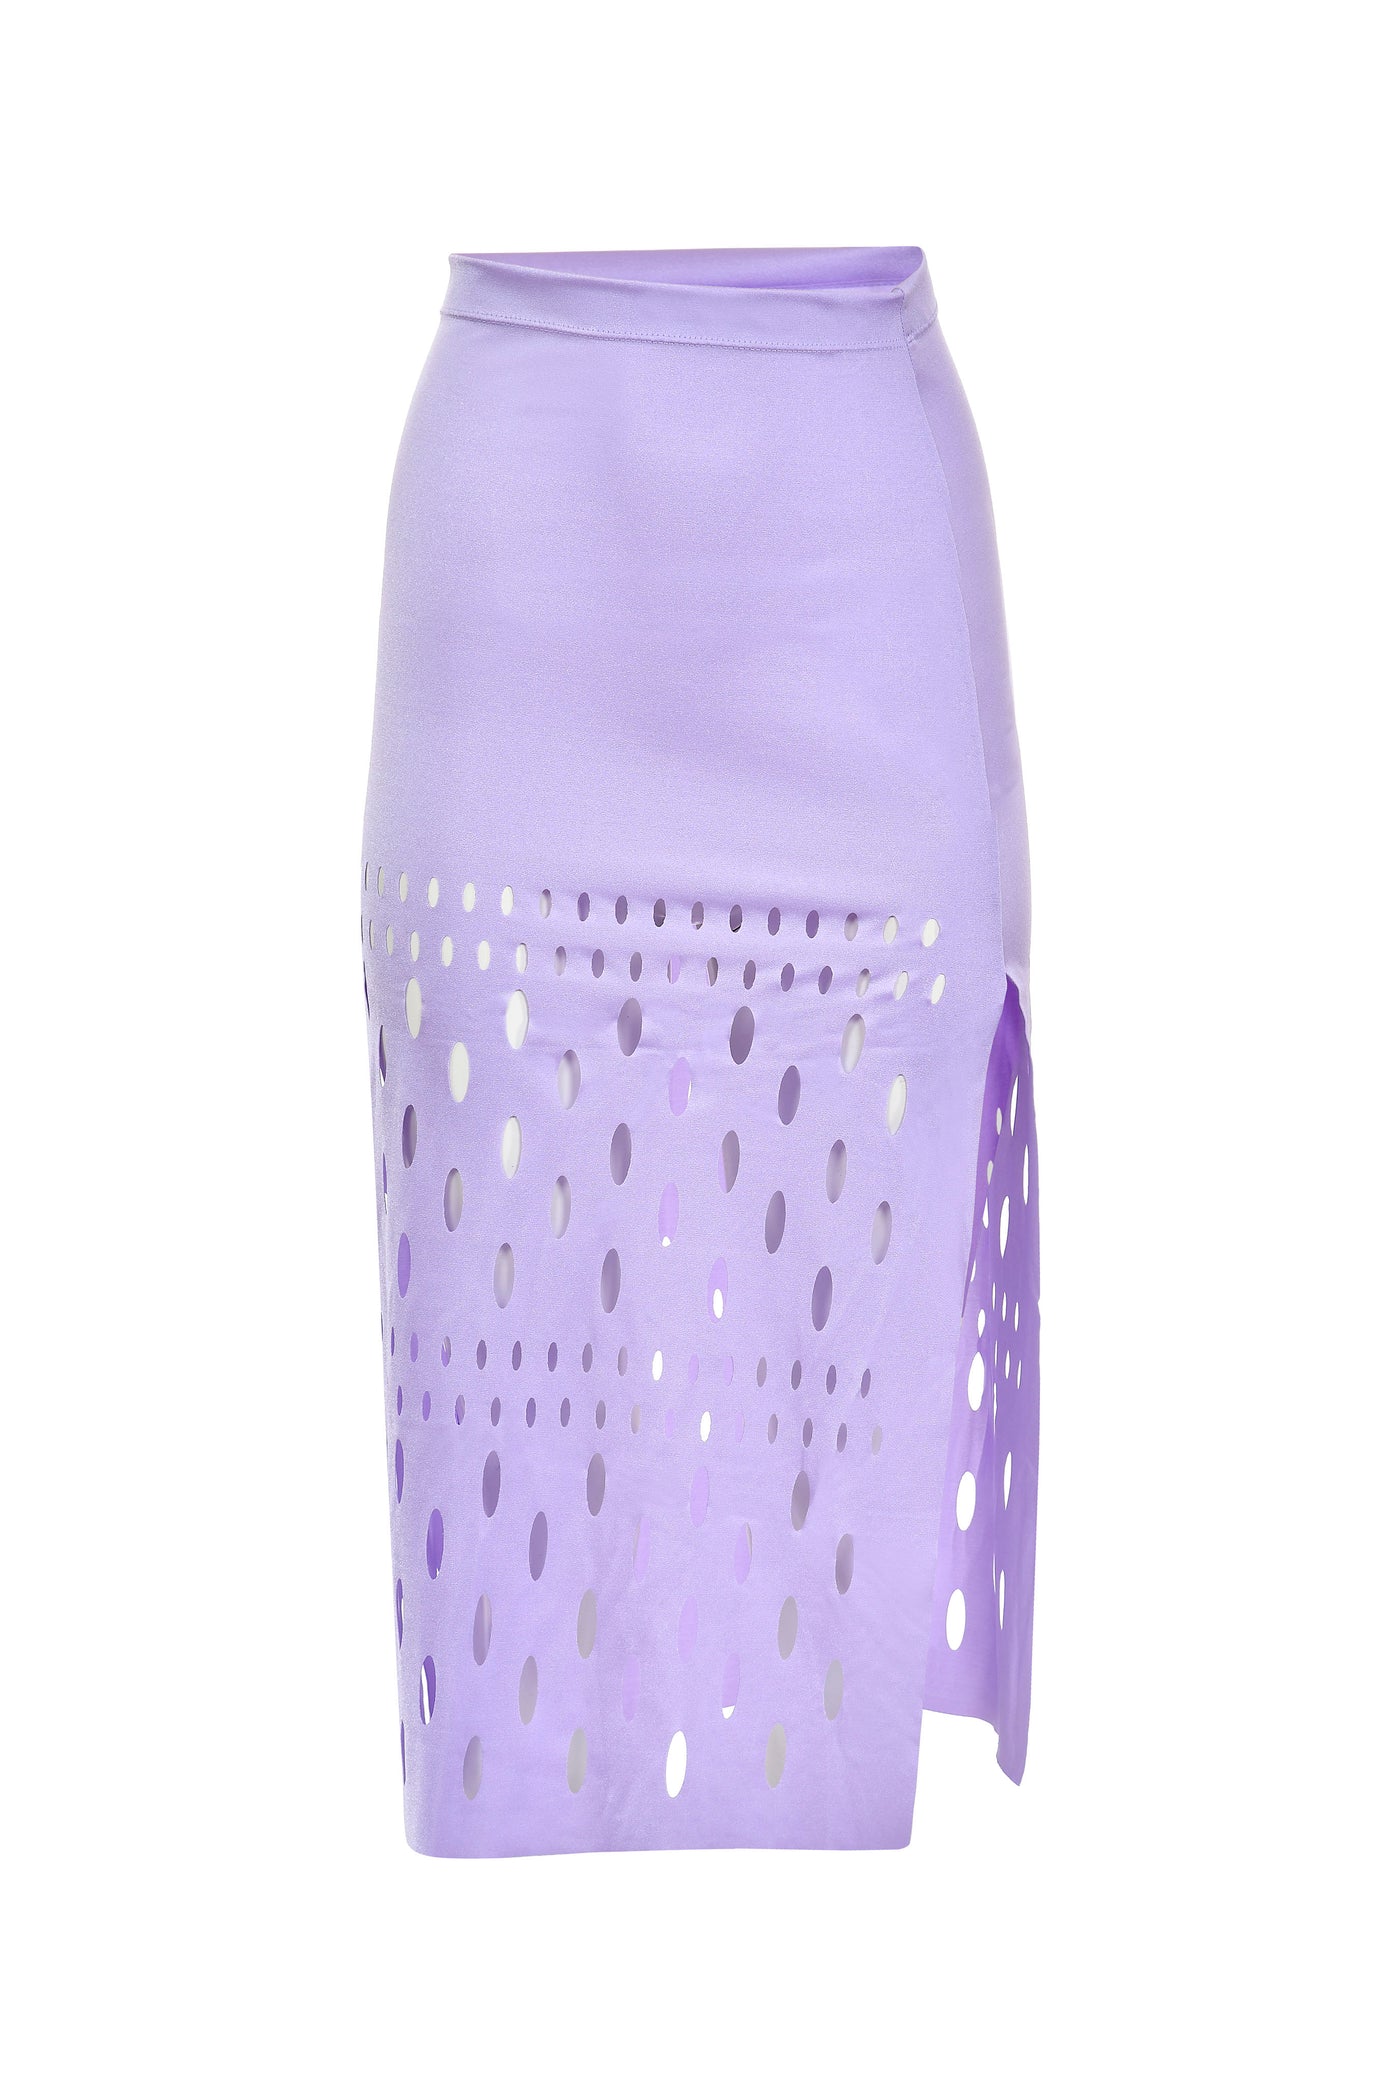 The Lilac Haute Mesh Skirt Set